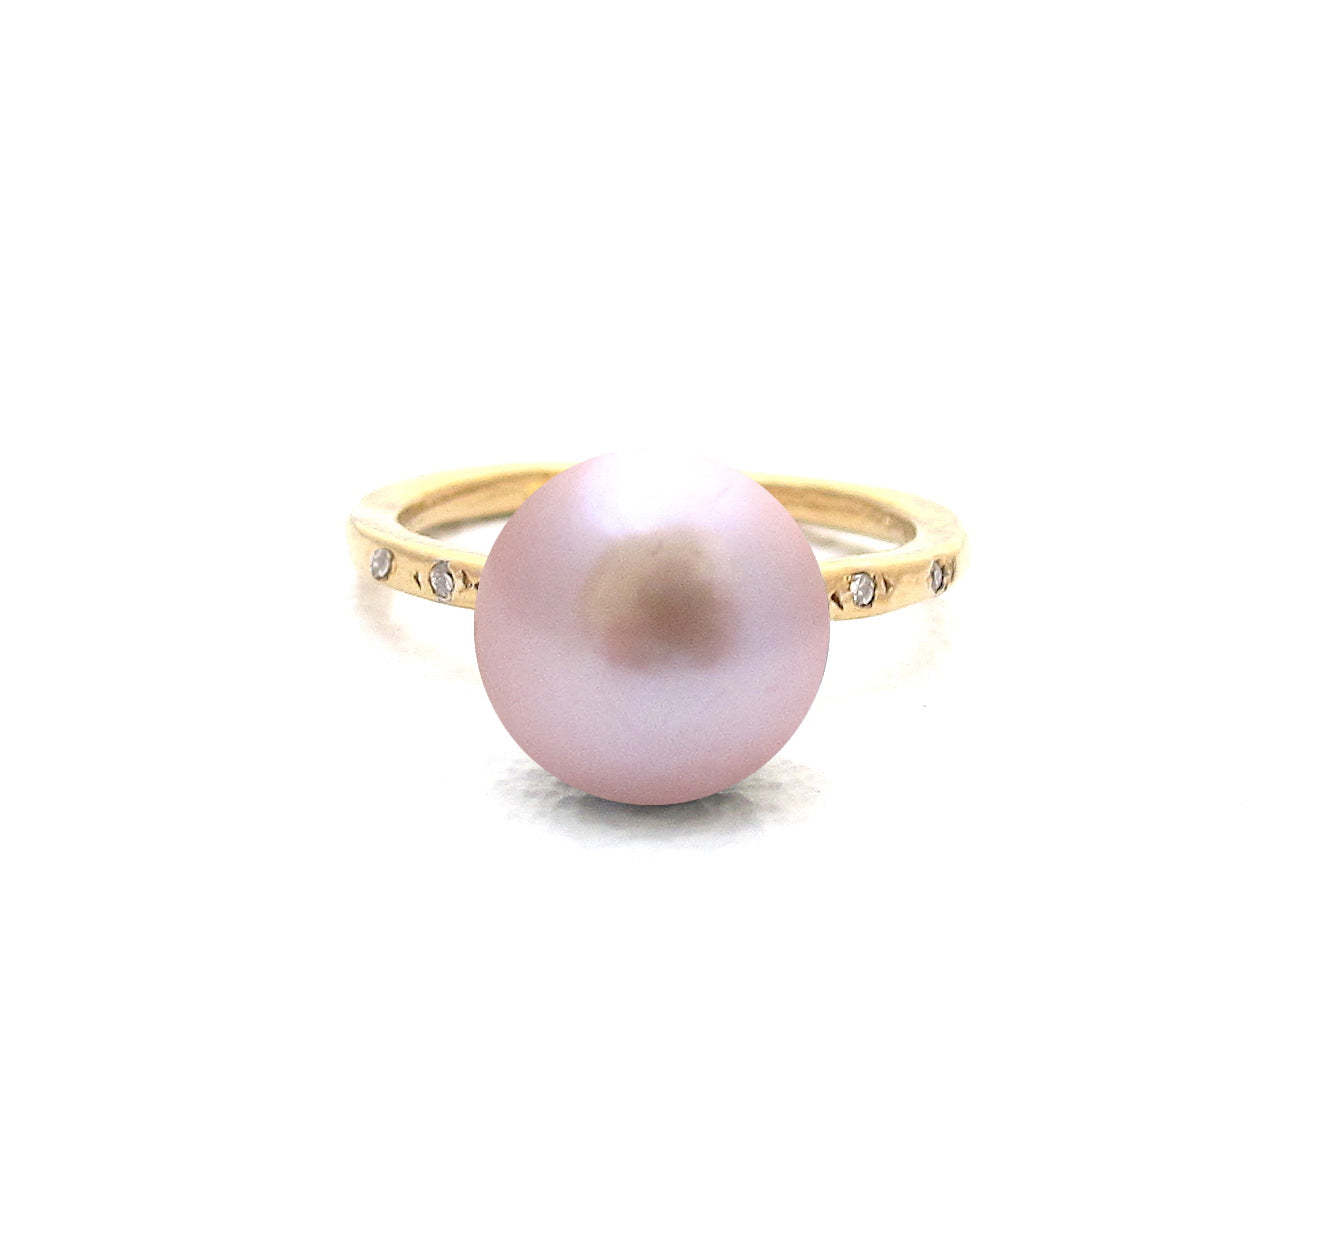 Orb Pink pearl Diamond Ring